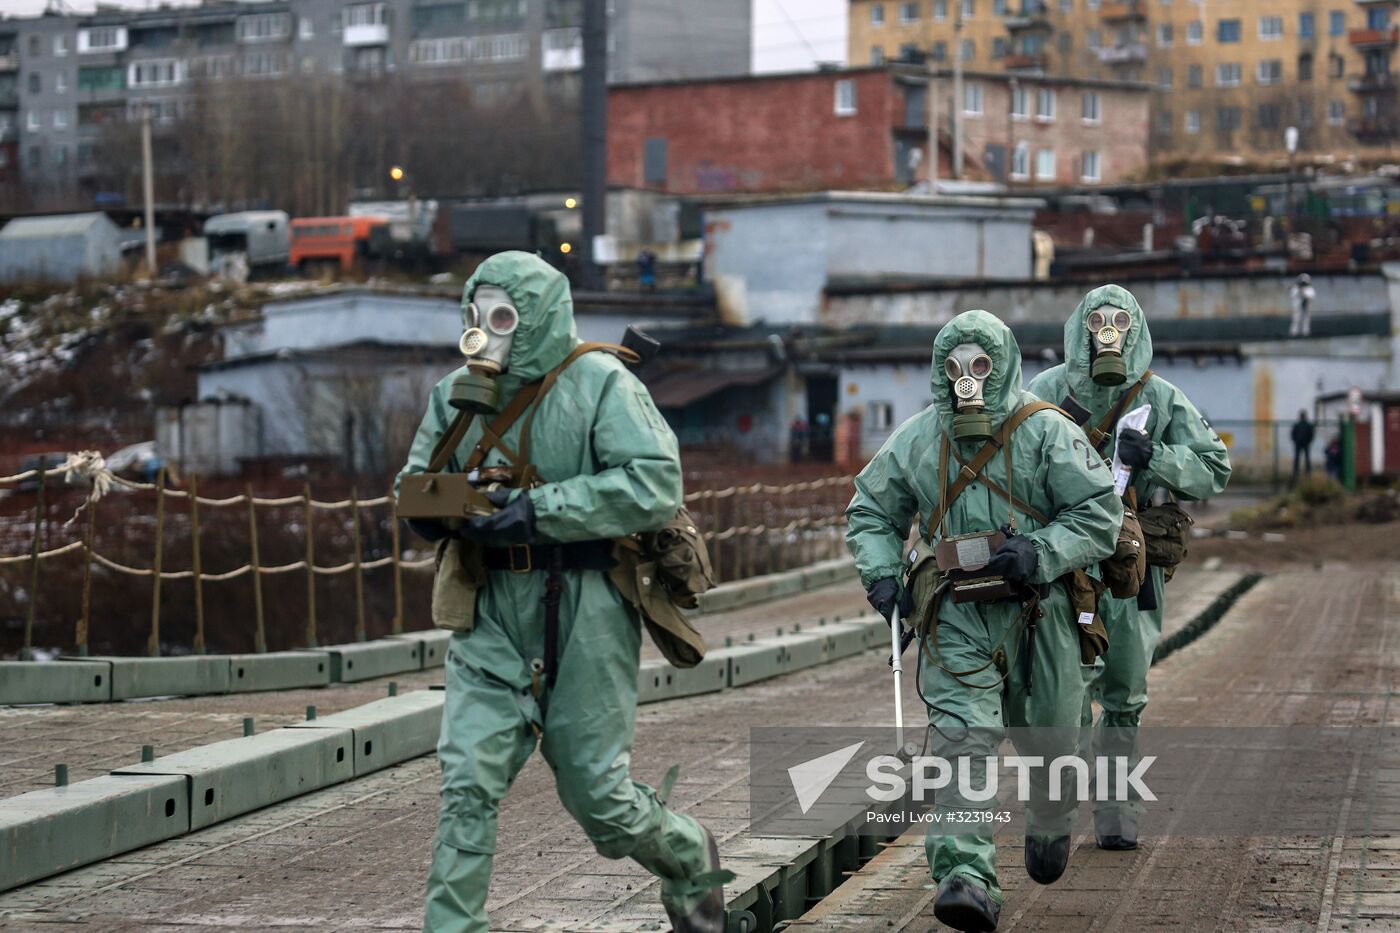 Military drill in Murmansk region